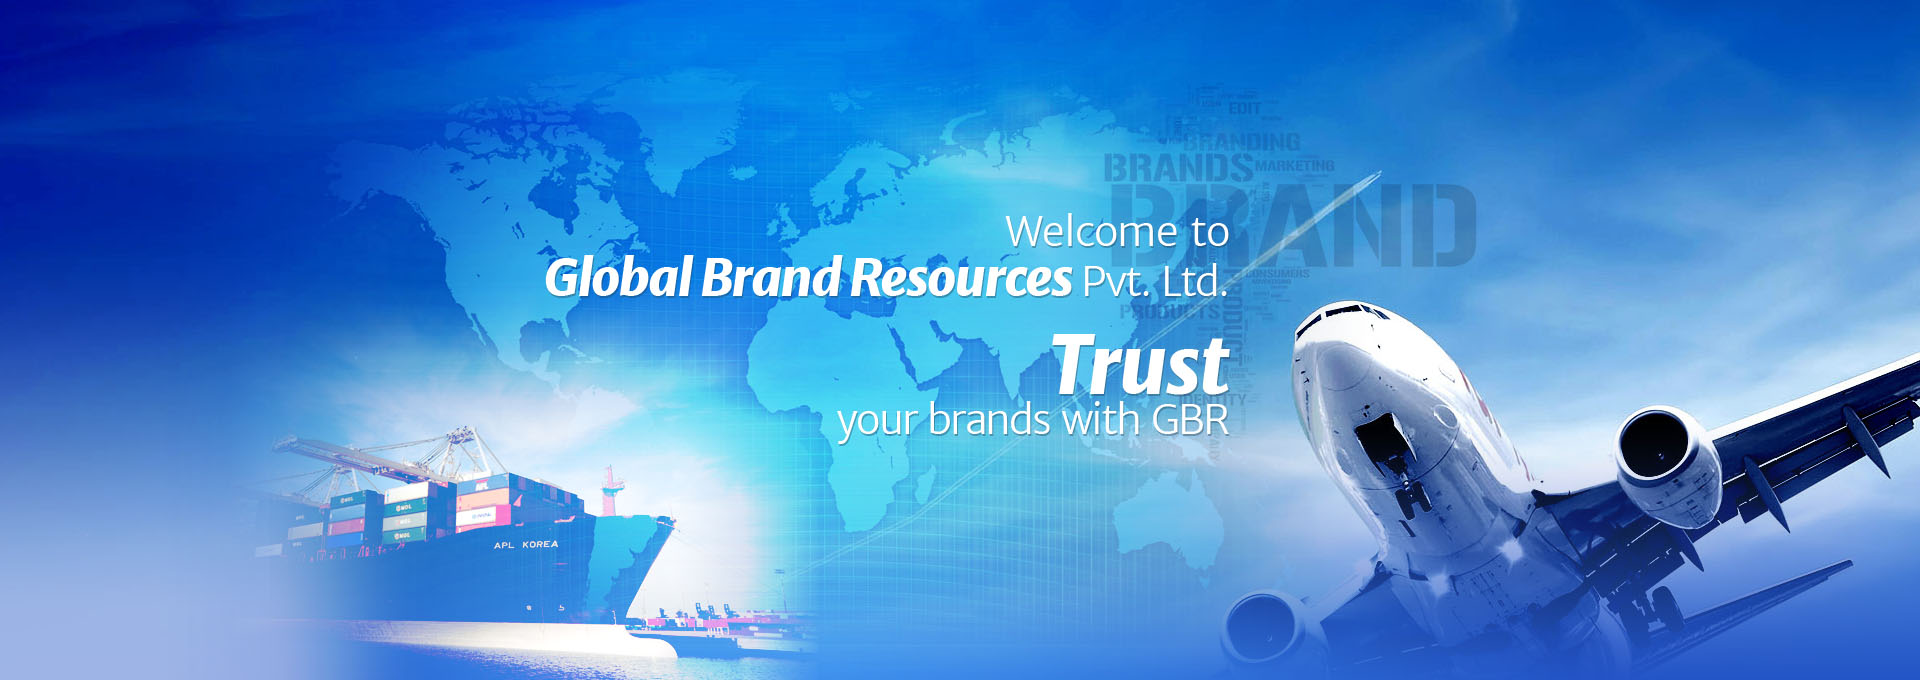 Global Brands Limited